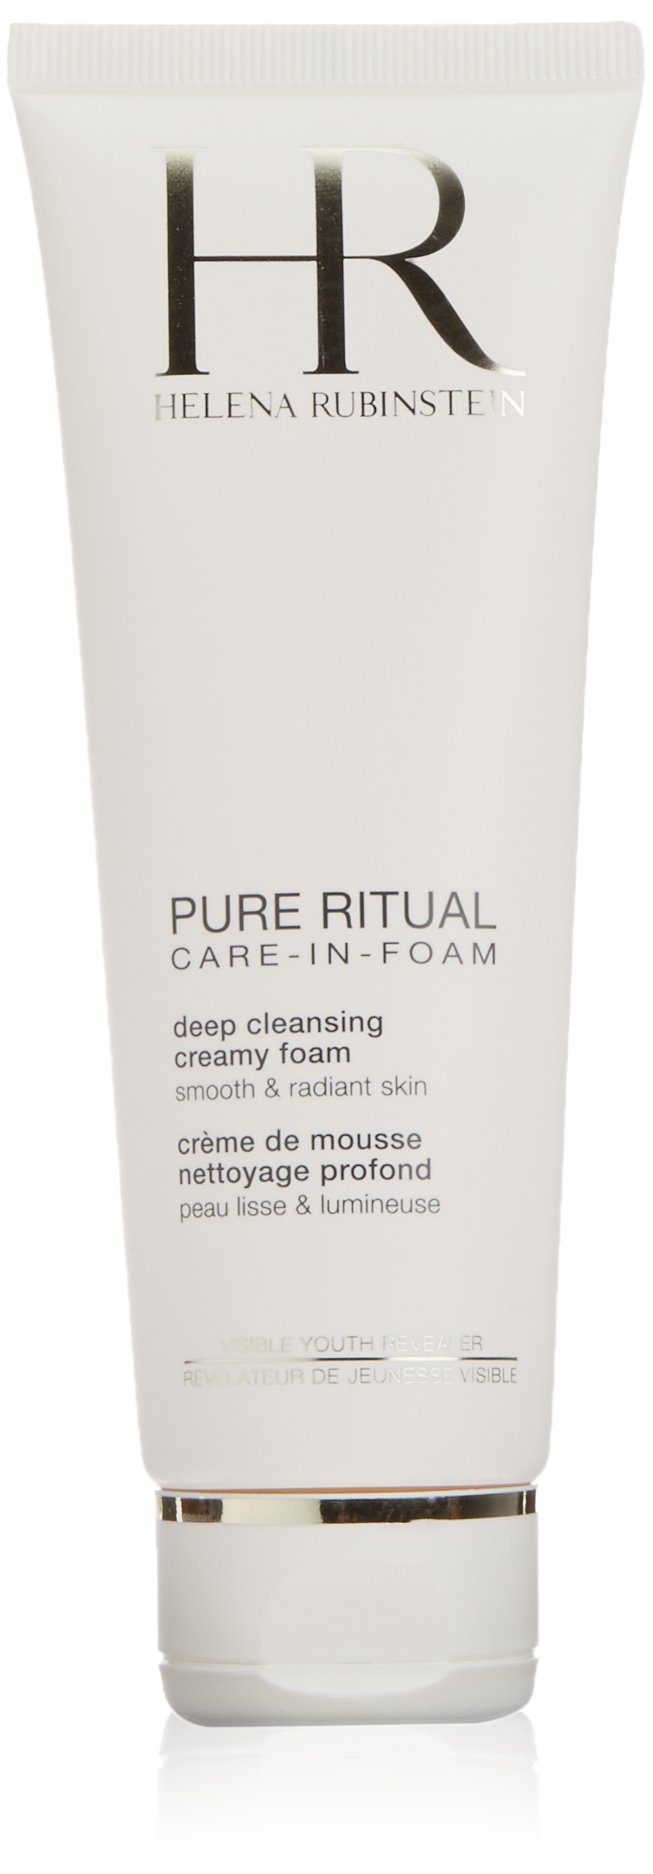 Helena Rubinstein Gesichtreinigungscreme - Pure Ritual Deep Cleansing Creamy Foam, 1er Pack (1 x 898 Stück)